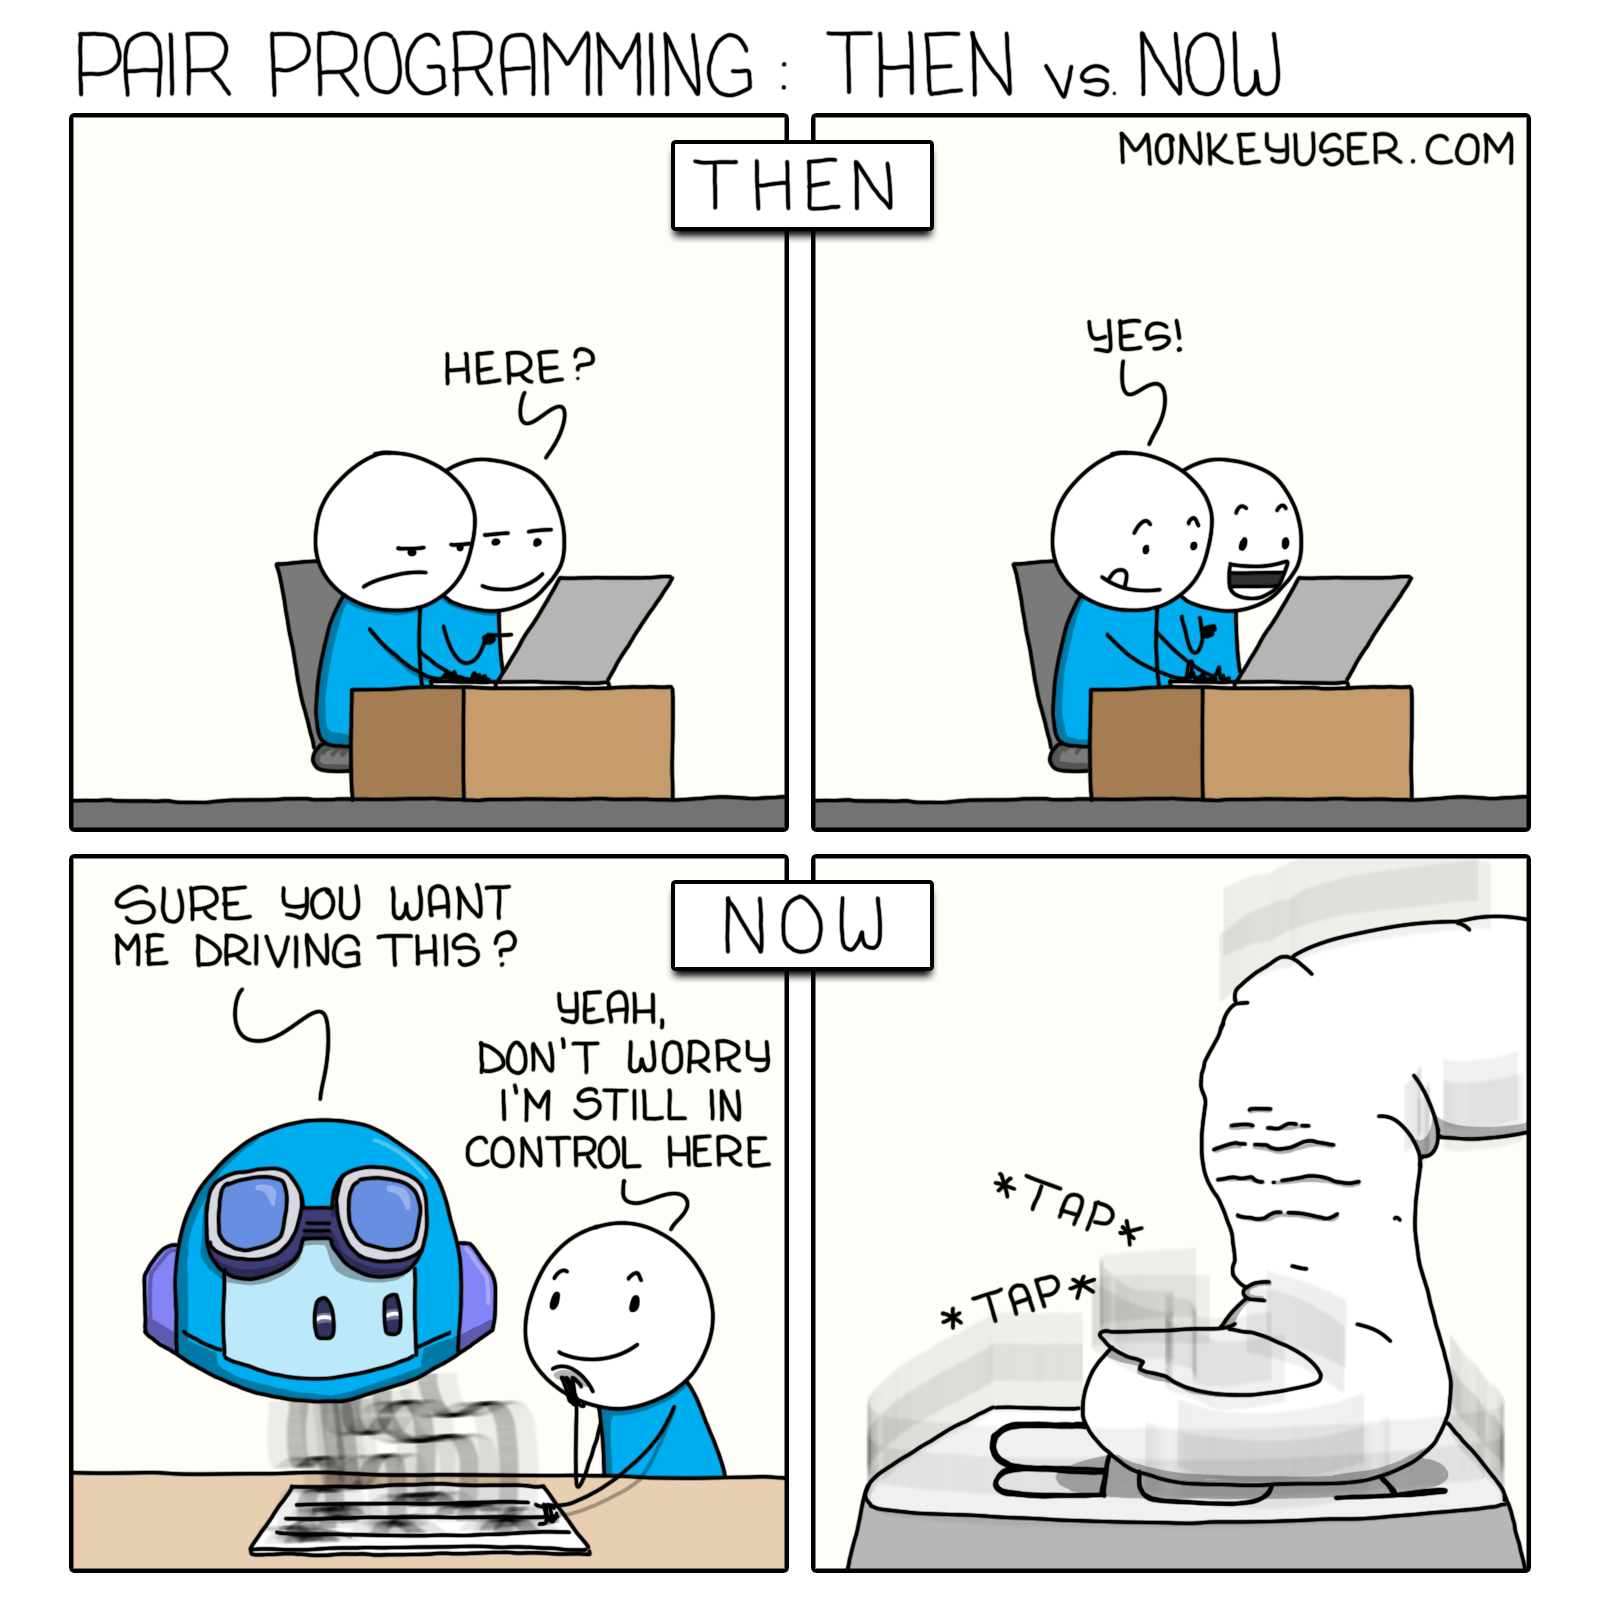 Pair programming nowadays